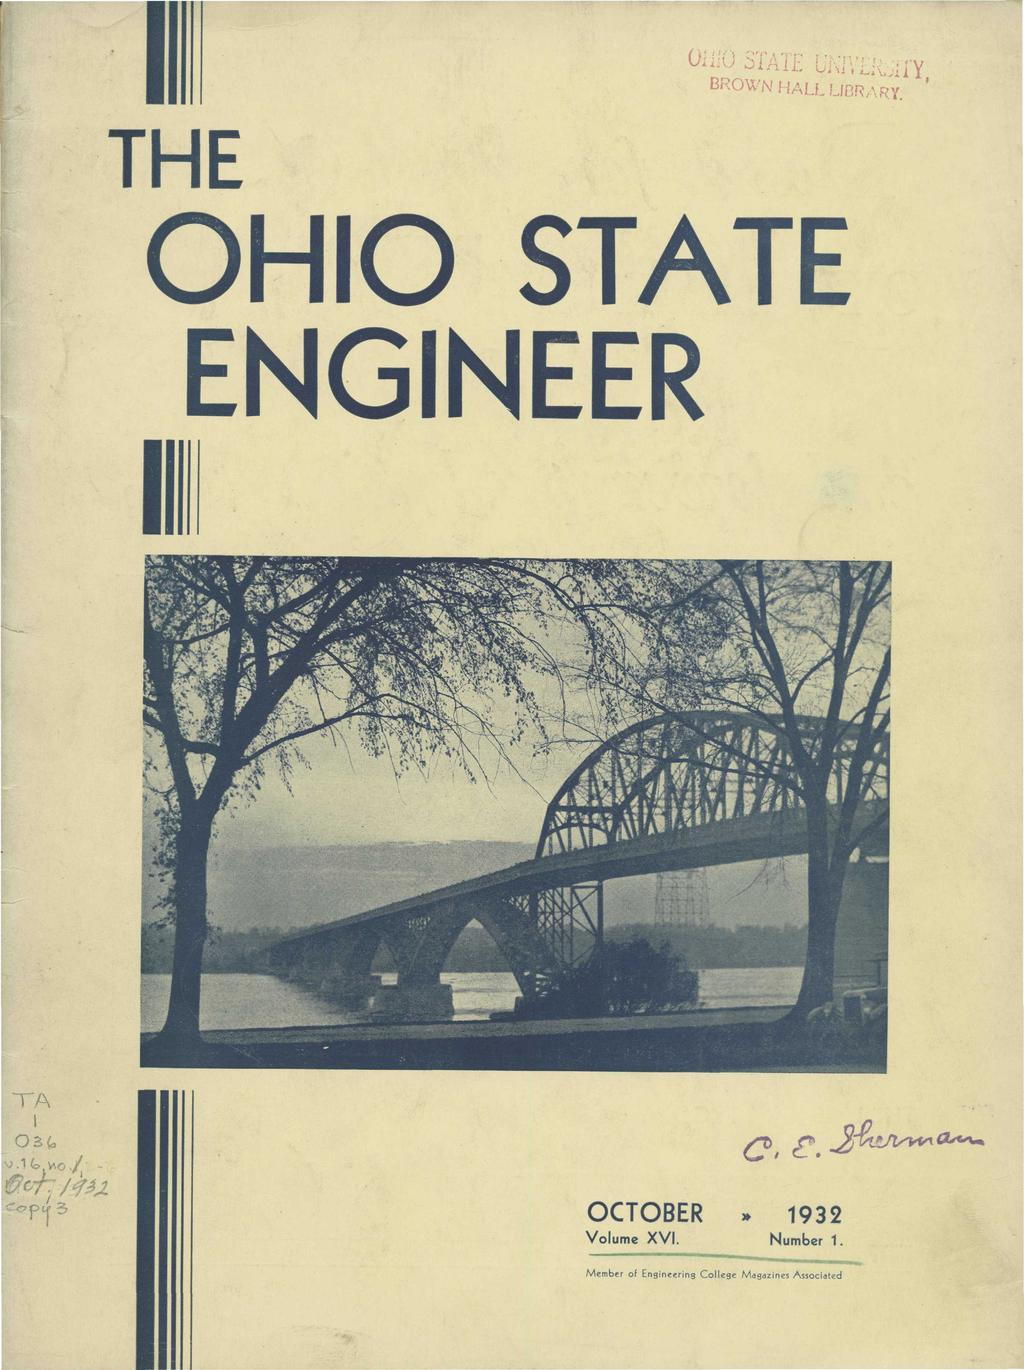 THE OHIO STATE ENGINEER OCTOBER» 1932 Volume XVI.